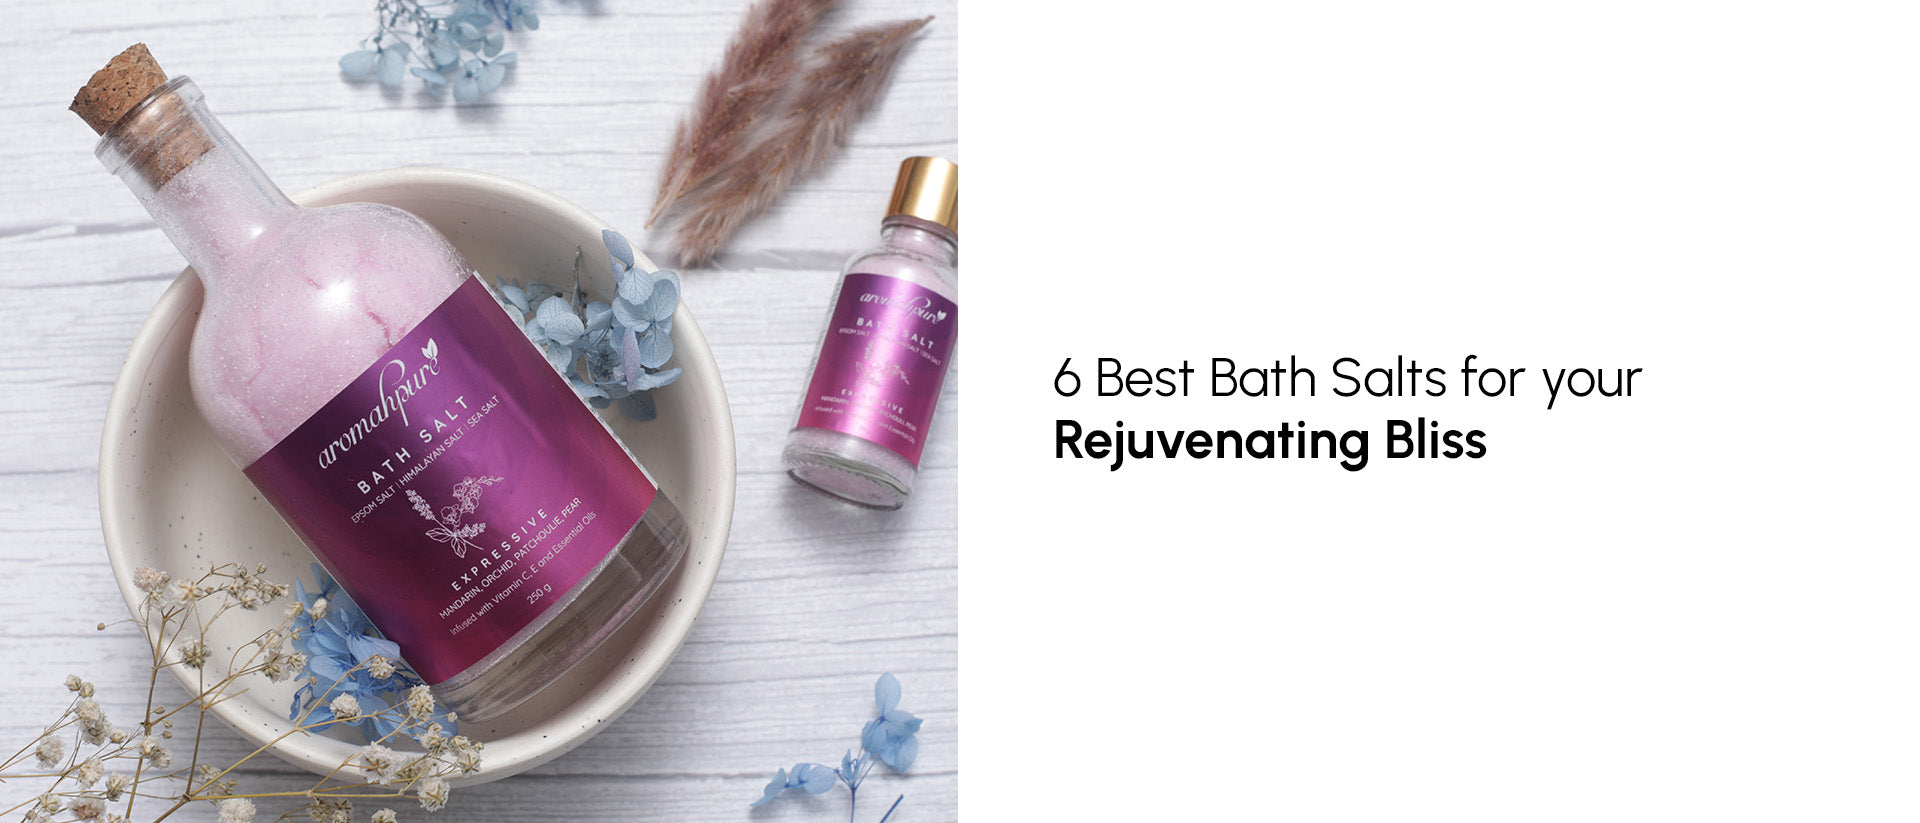 6 Best Bath Salts for your Rejuvenating Bliss